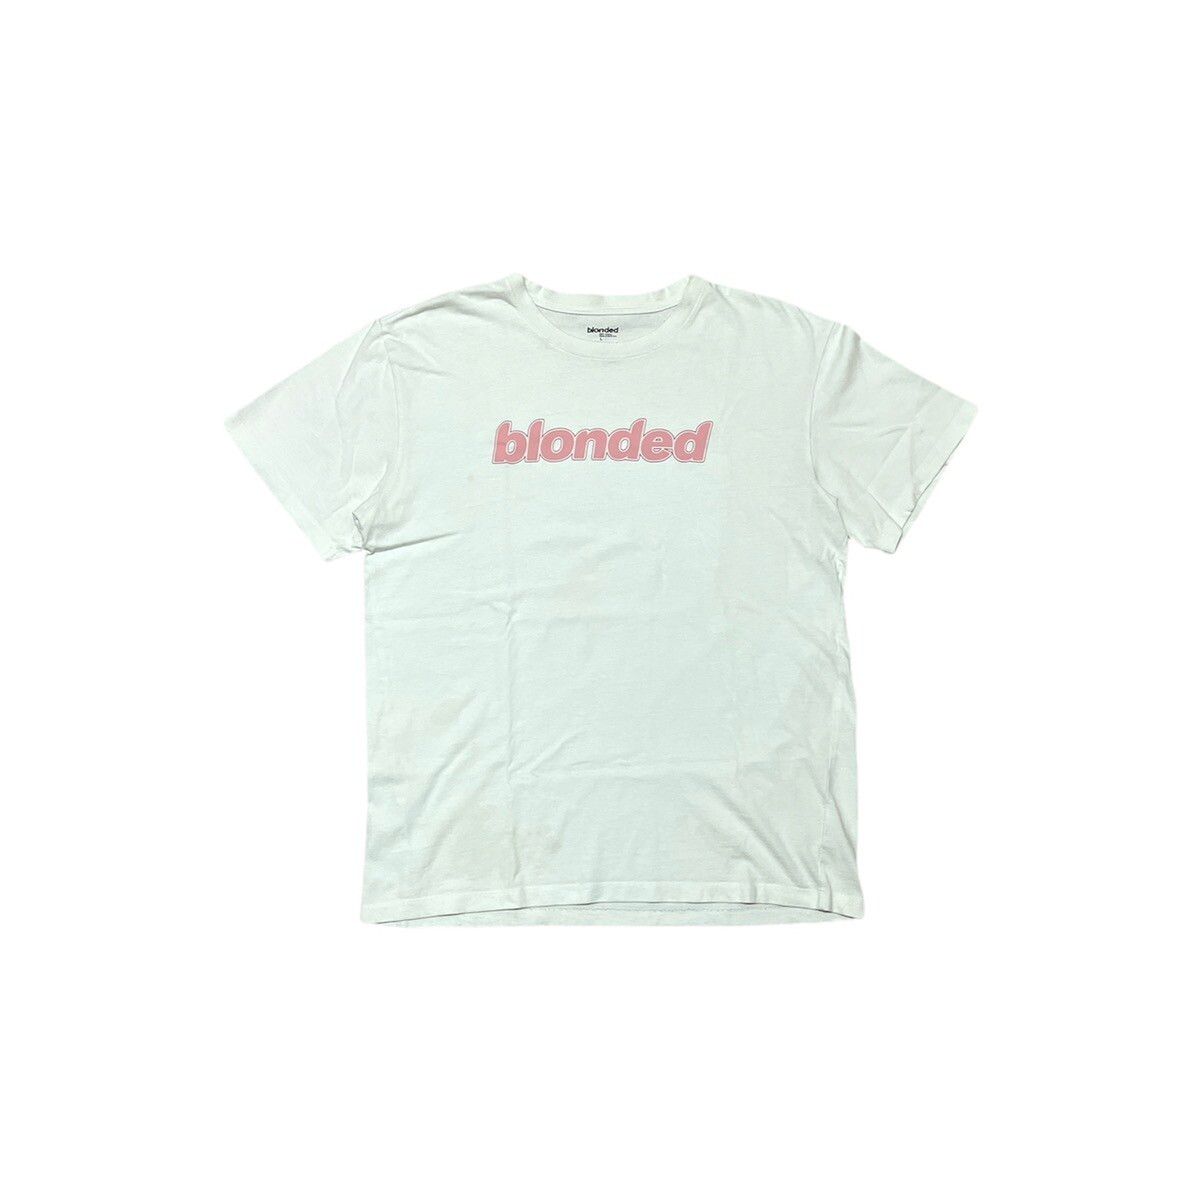 Frank Ocean Blonded T shirt - 1